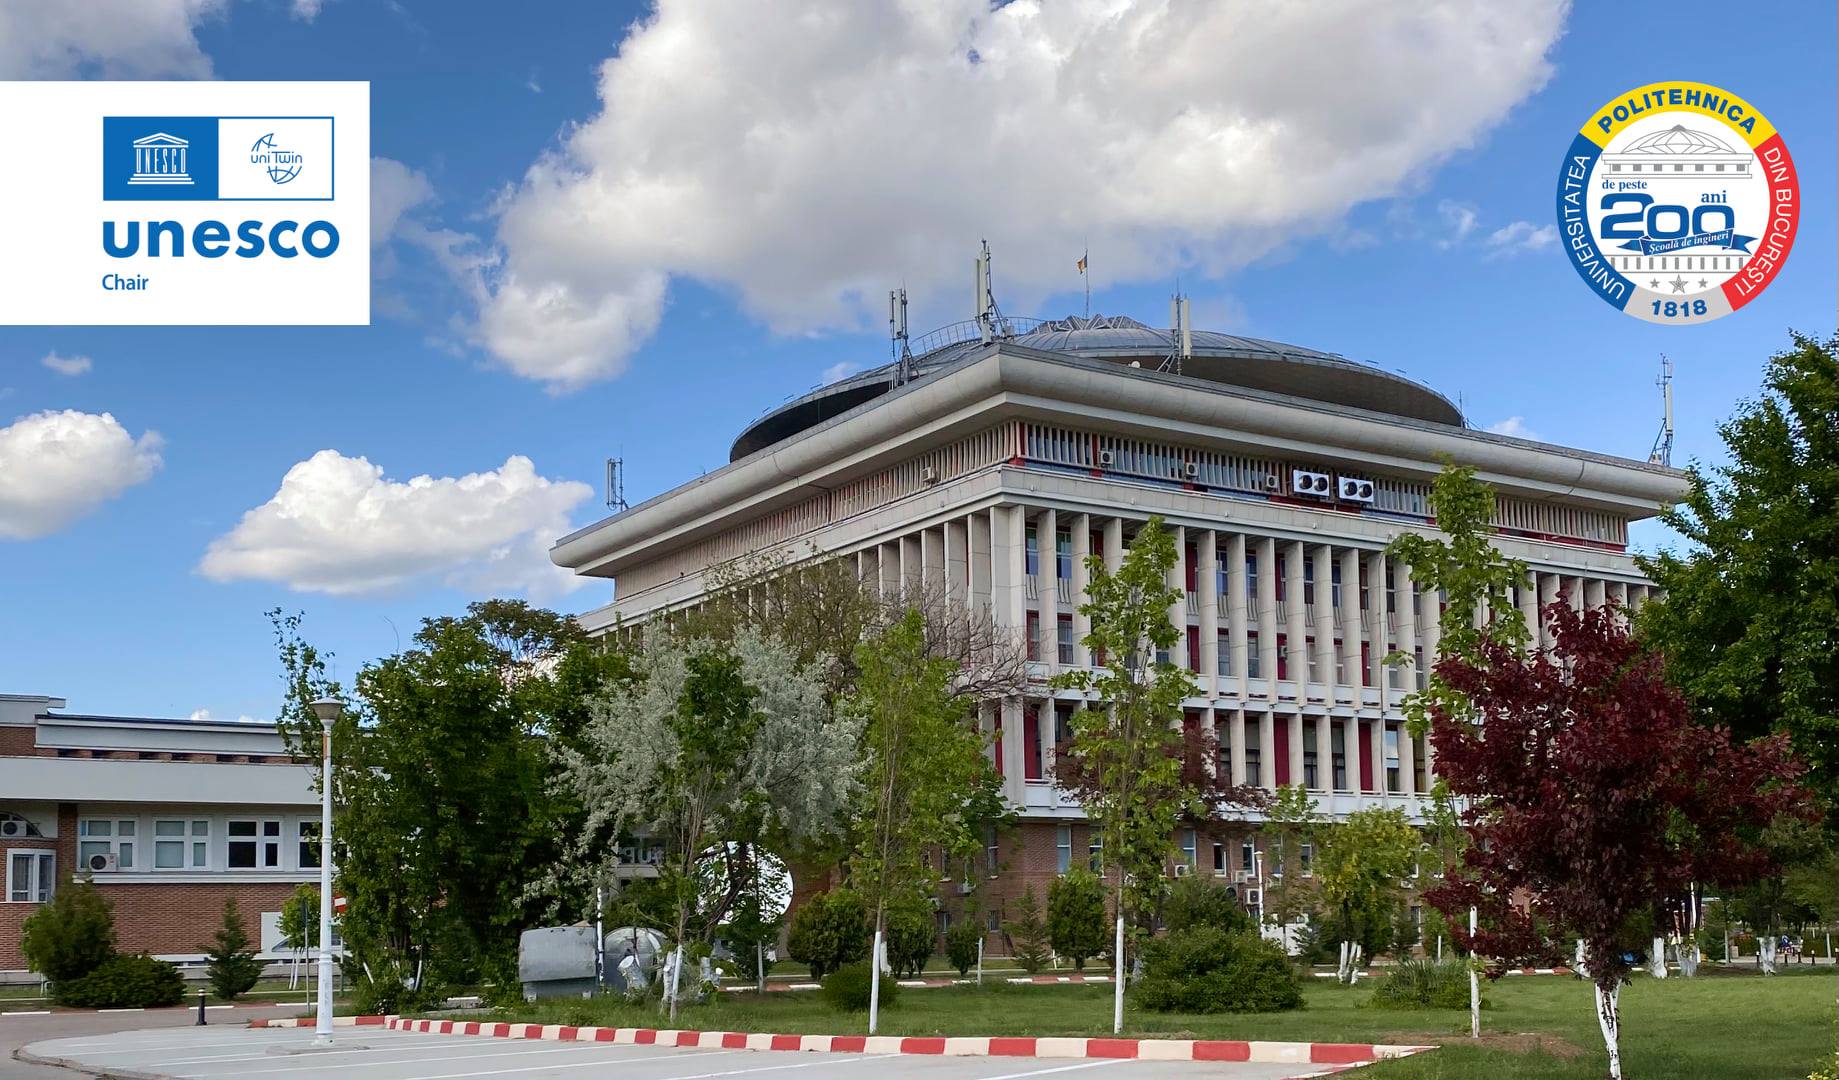 UNESCO Days at POLITEHNICA University of Bucharest